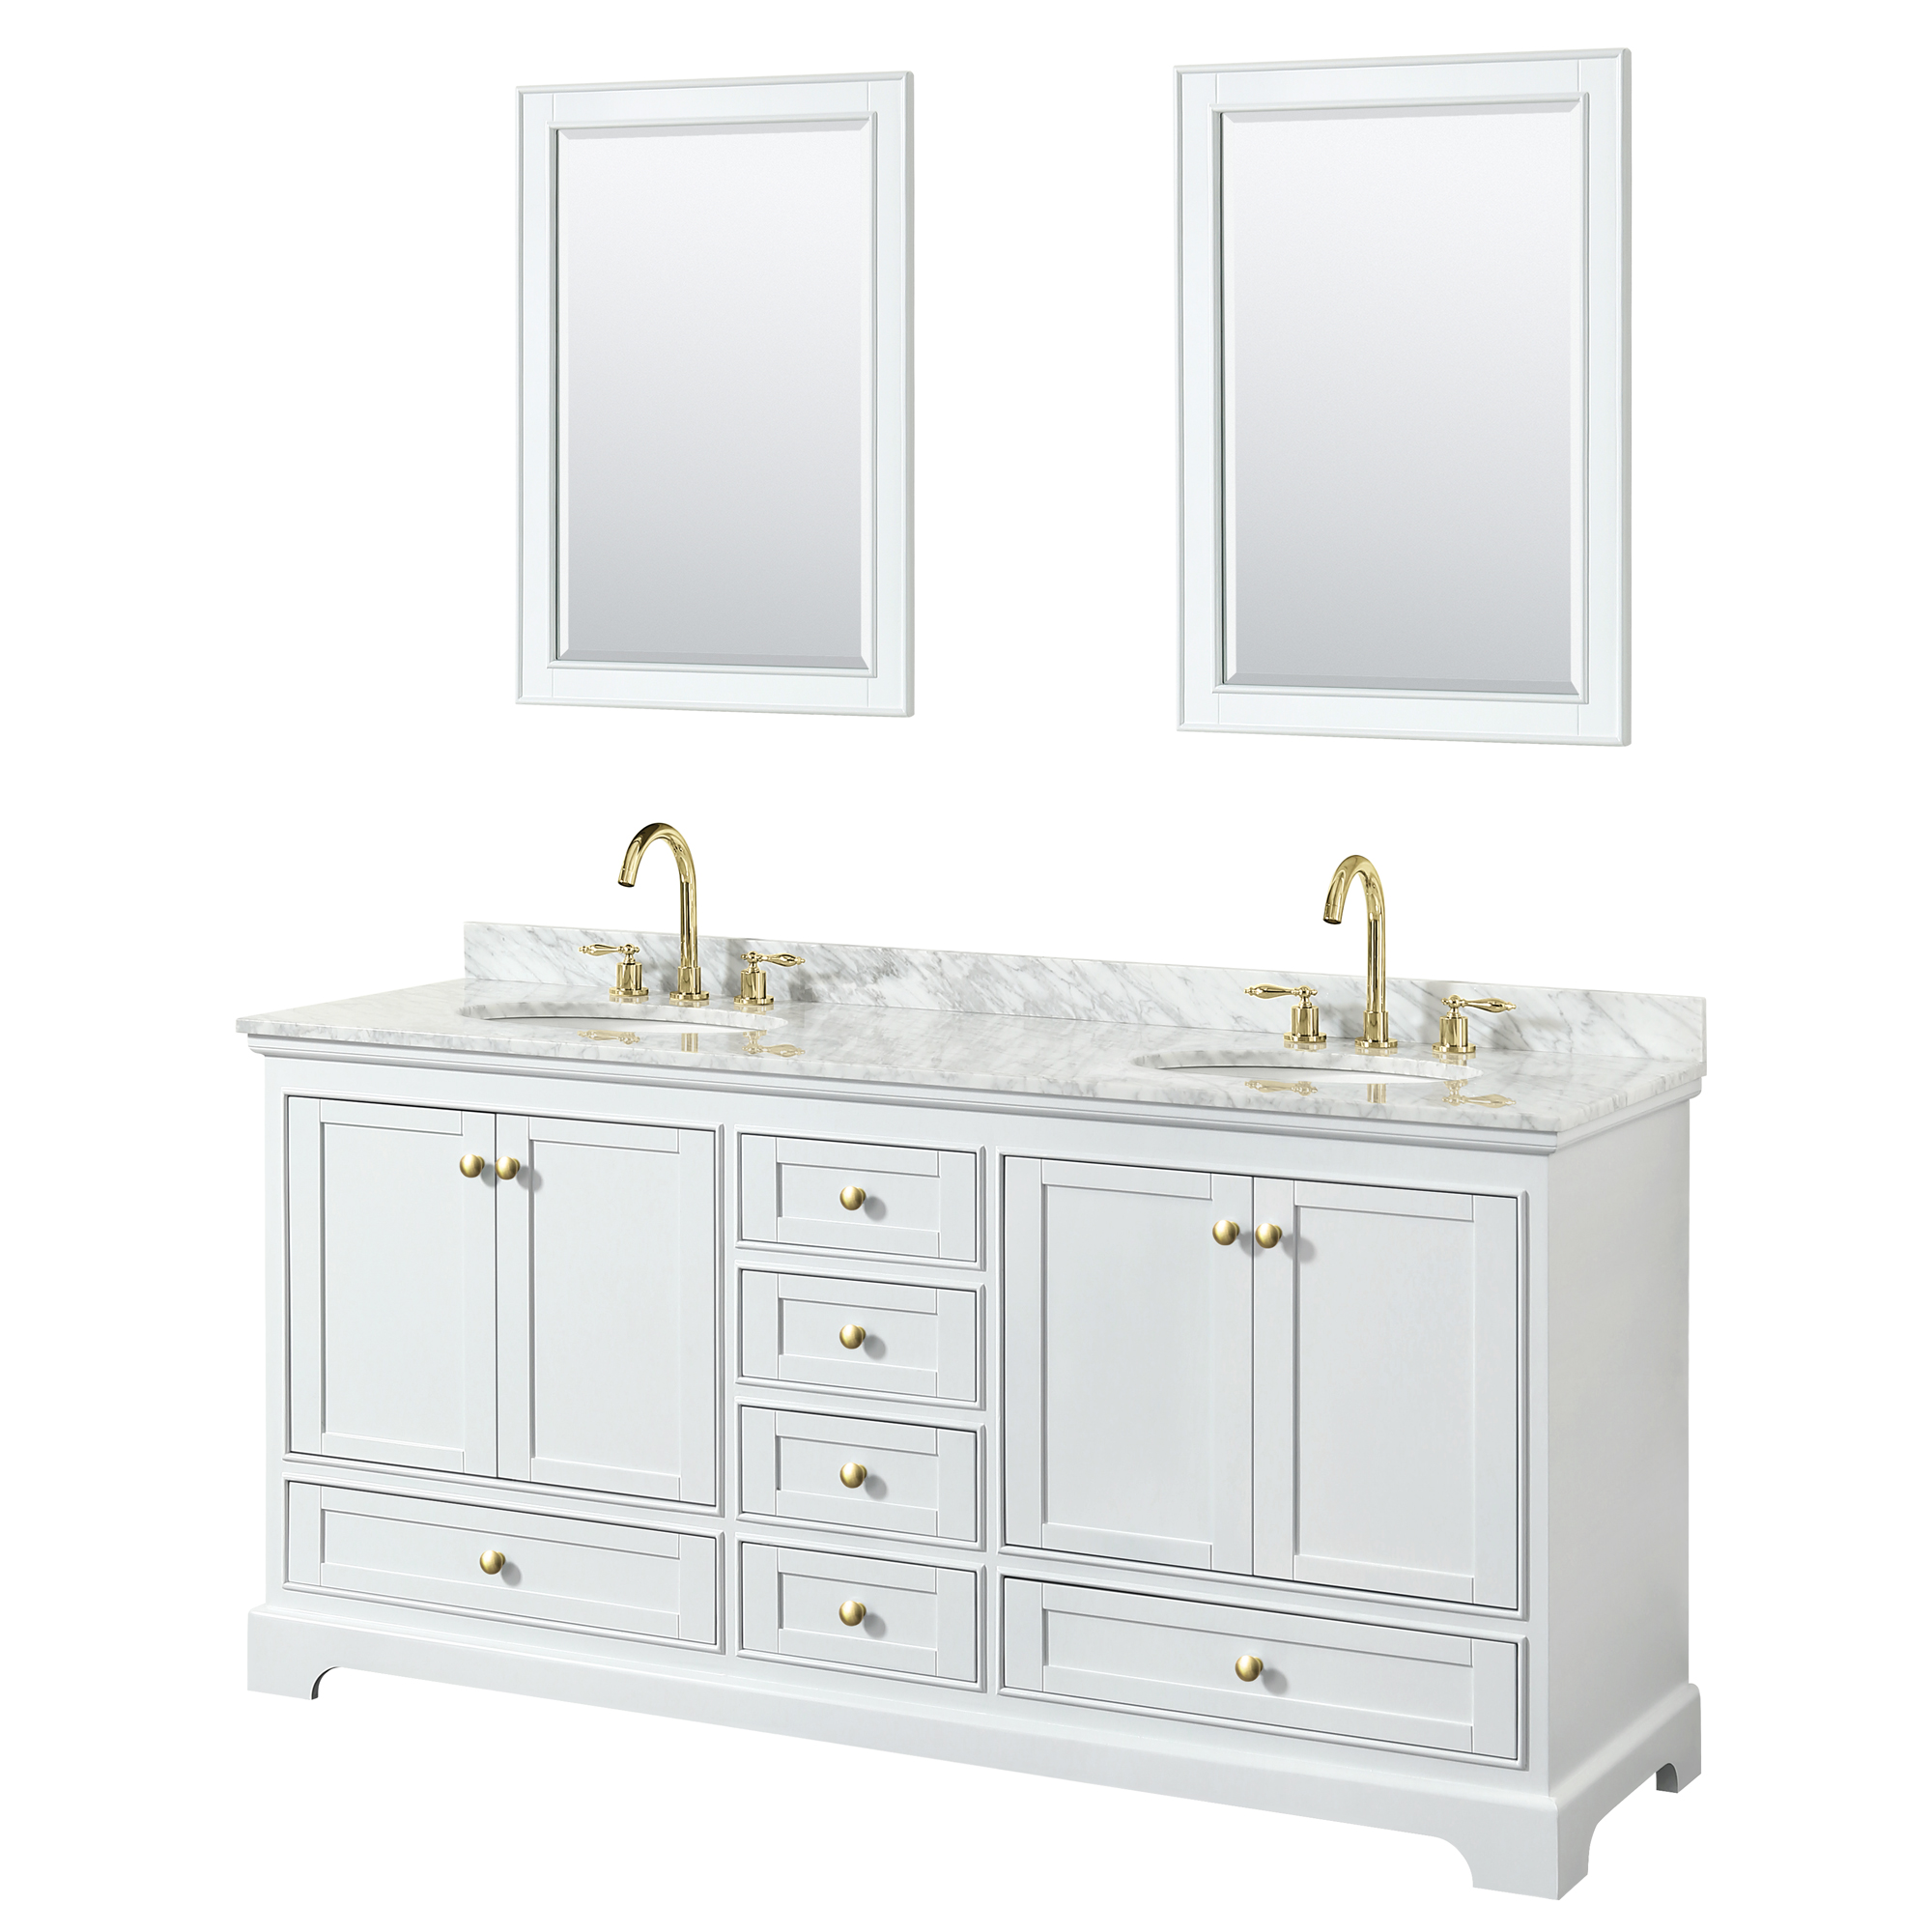 and 24 inch Mirrors No Countertop No Sinks Wyndham Collection Deborah 72 inch Double Bathroom Vanity in White 